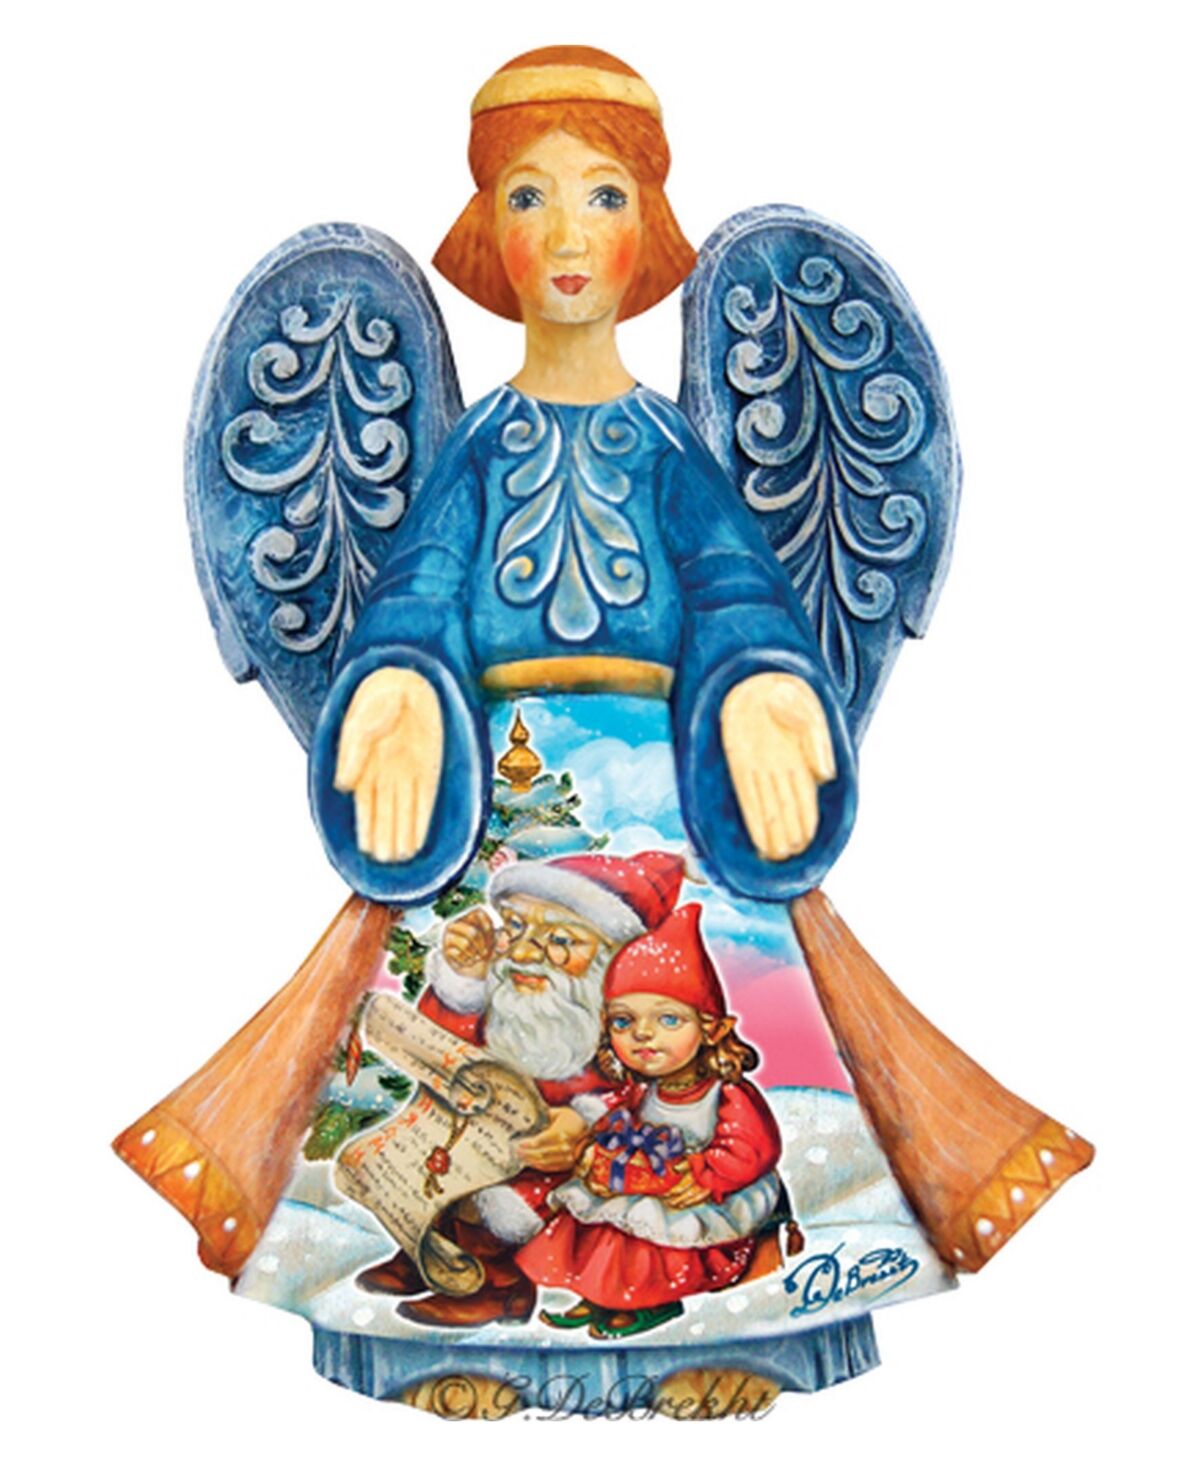 G.DeBrekht Christmas Angel Figurine - Multi